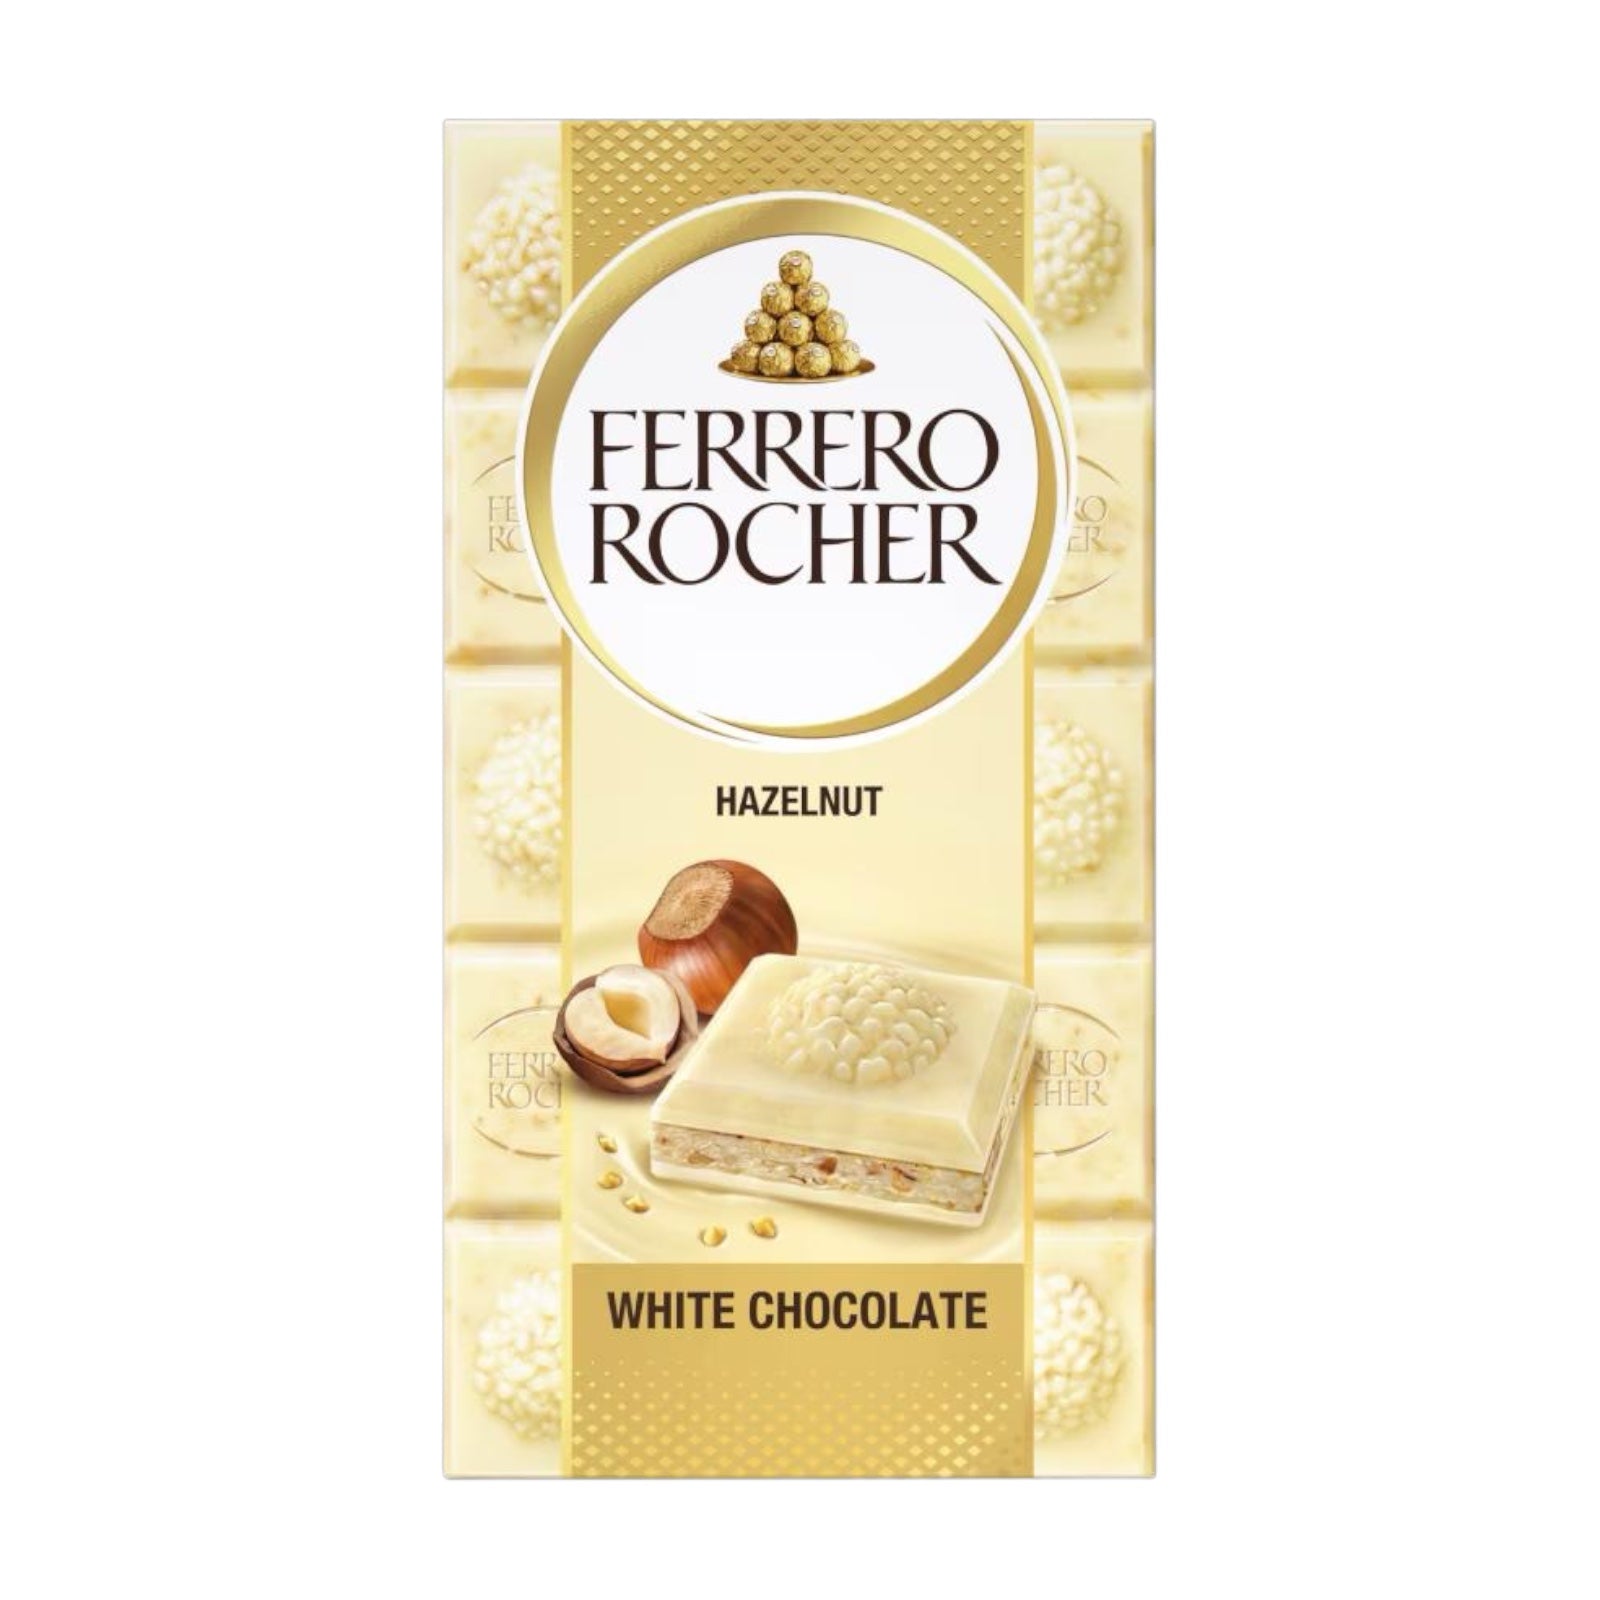 Ferrero Rocher Chocolate Bar
White Chocolate Bar With Hazelnut 90g